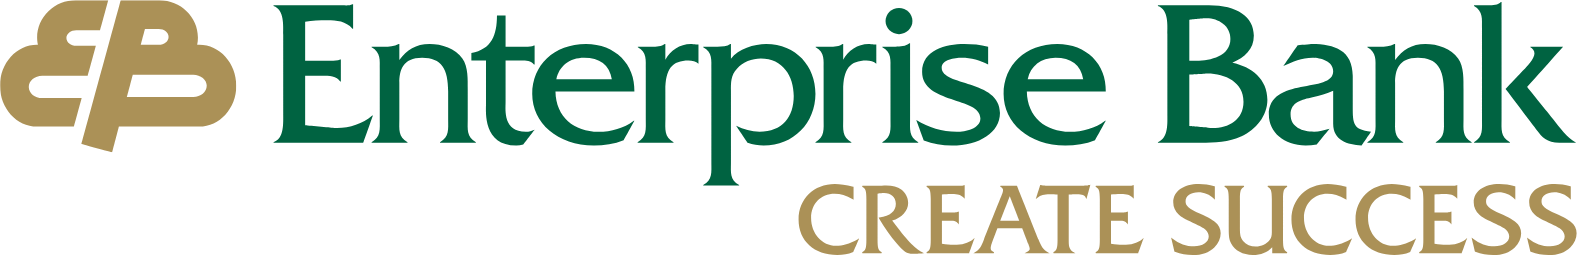 Enterprise Bancorp logo large (transparent PNG)